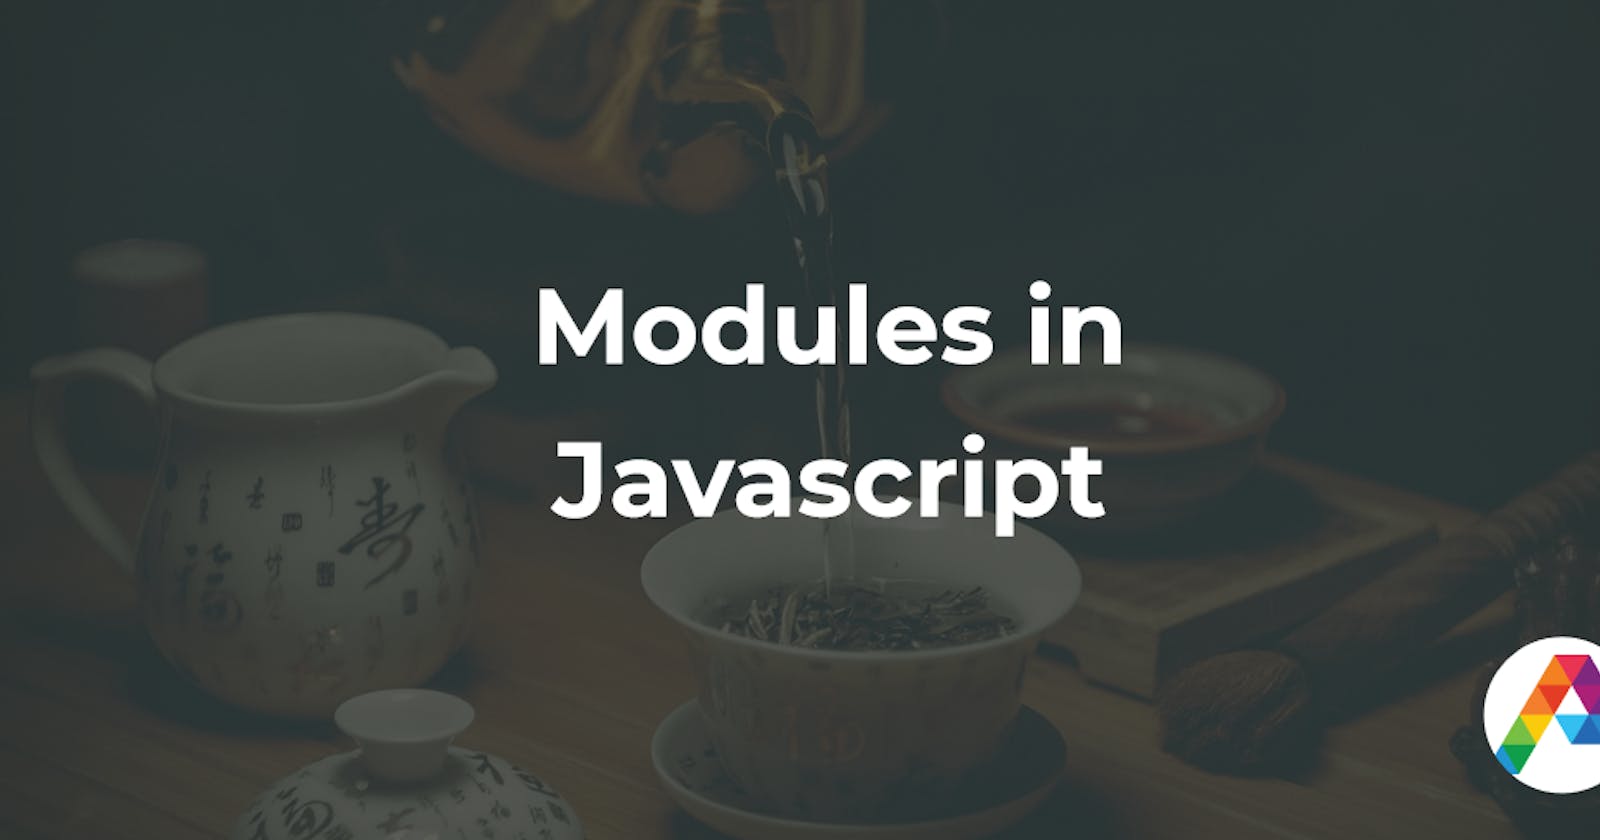 Modules in Javascript